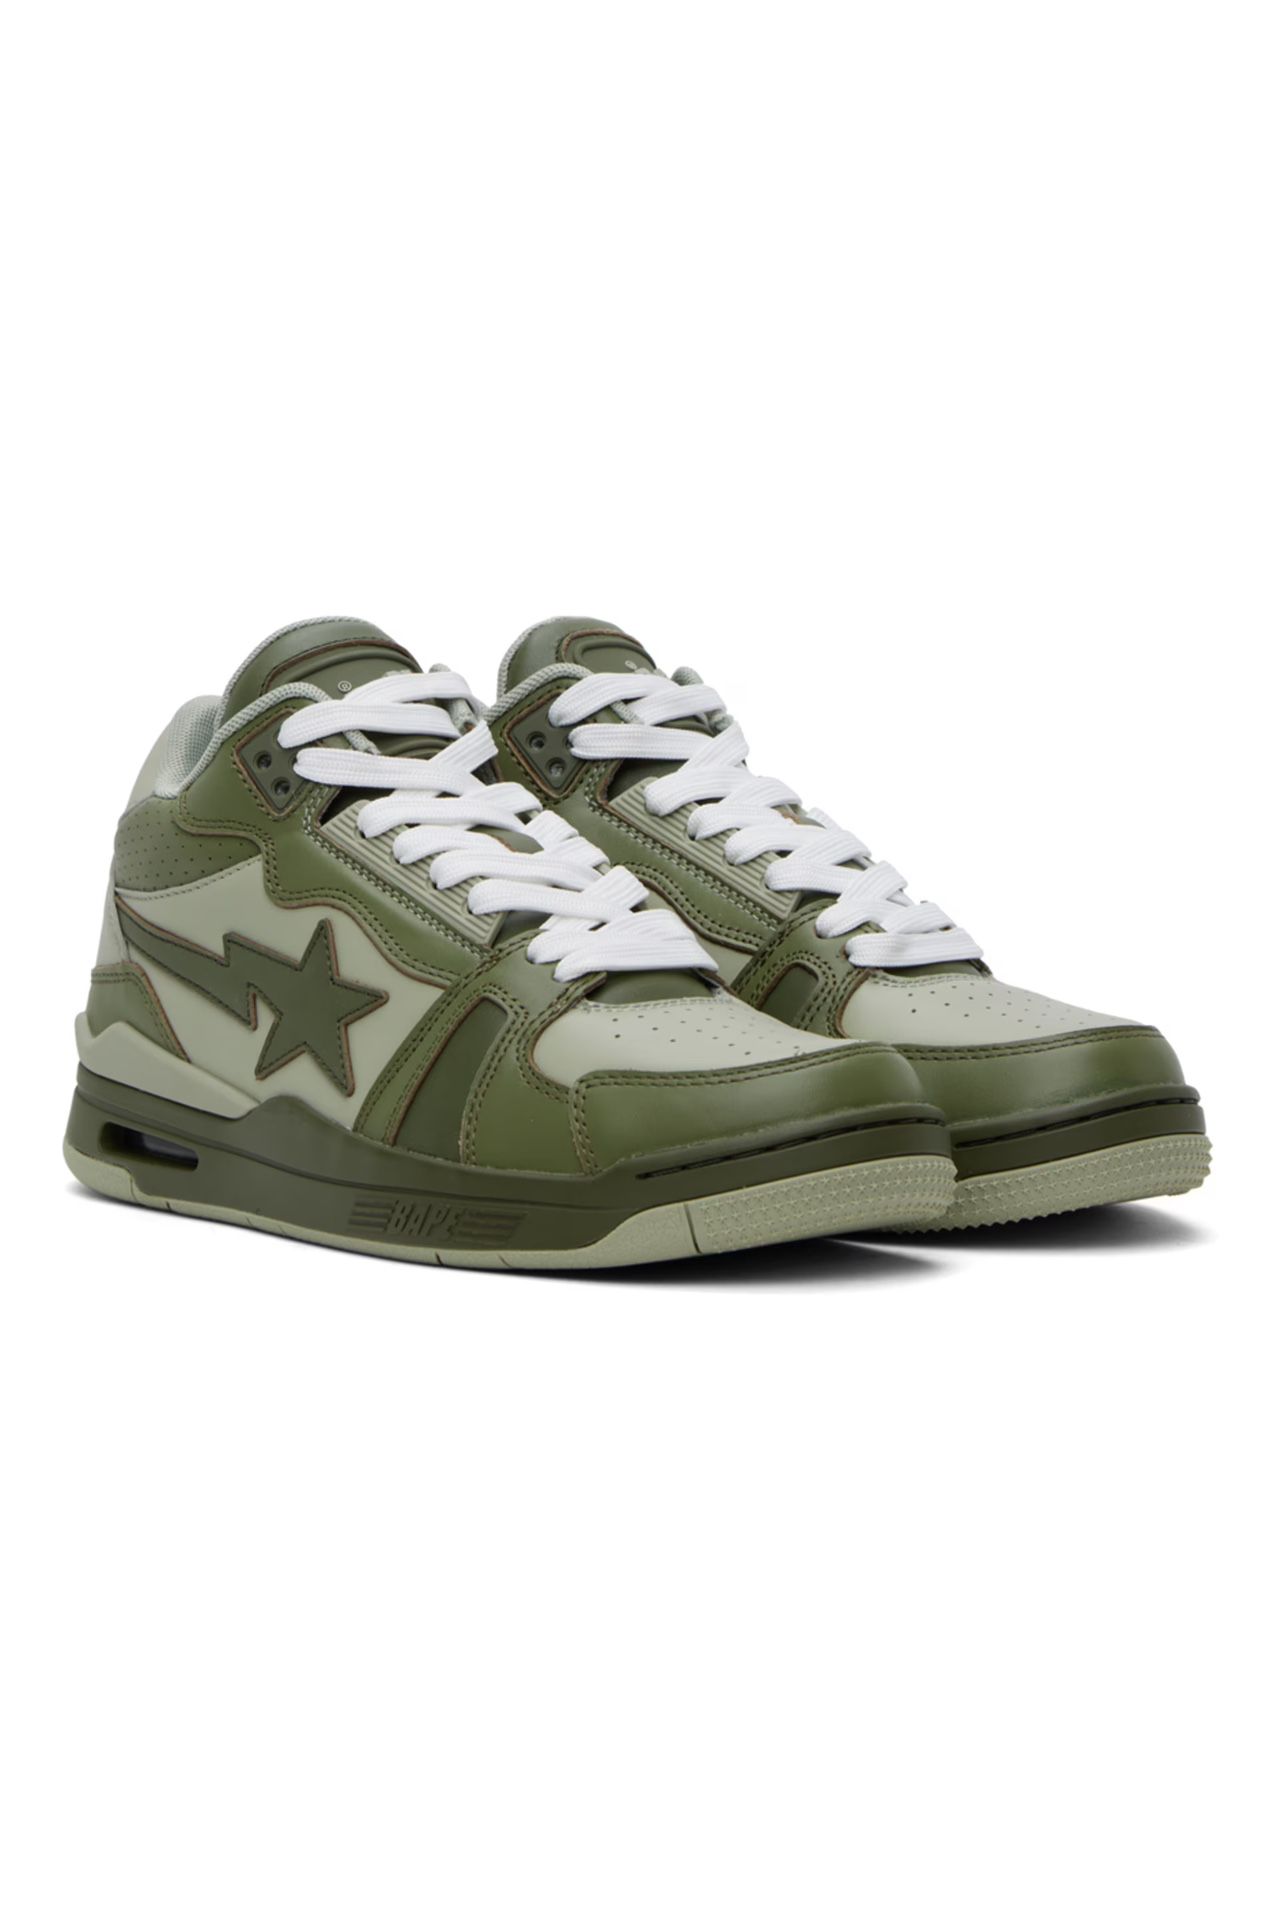 Bape Green Sta M1 Sneakers Size 9.5 